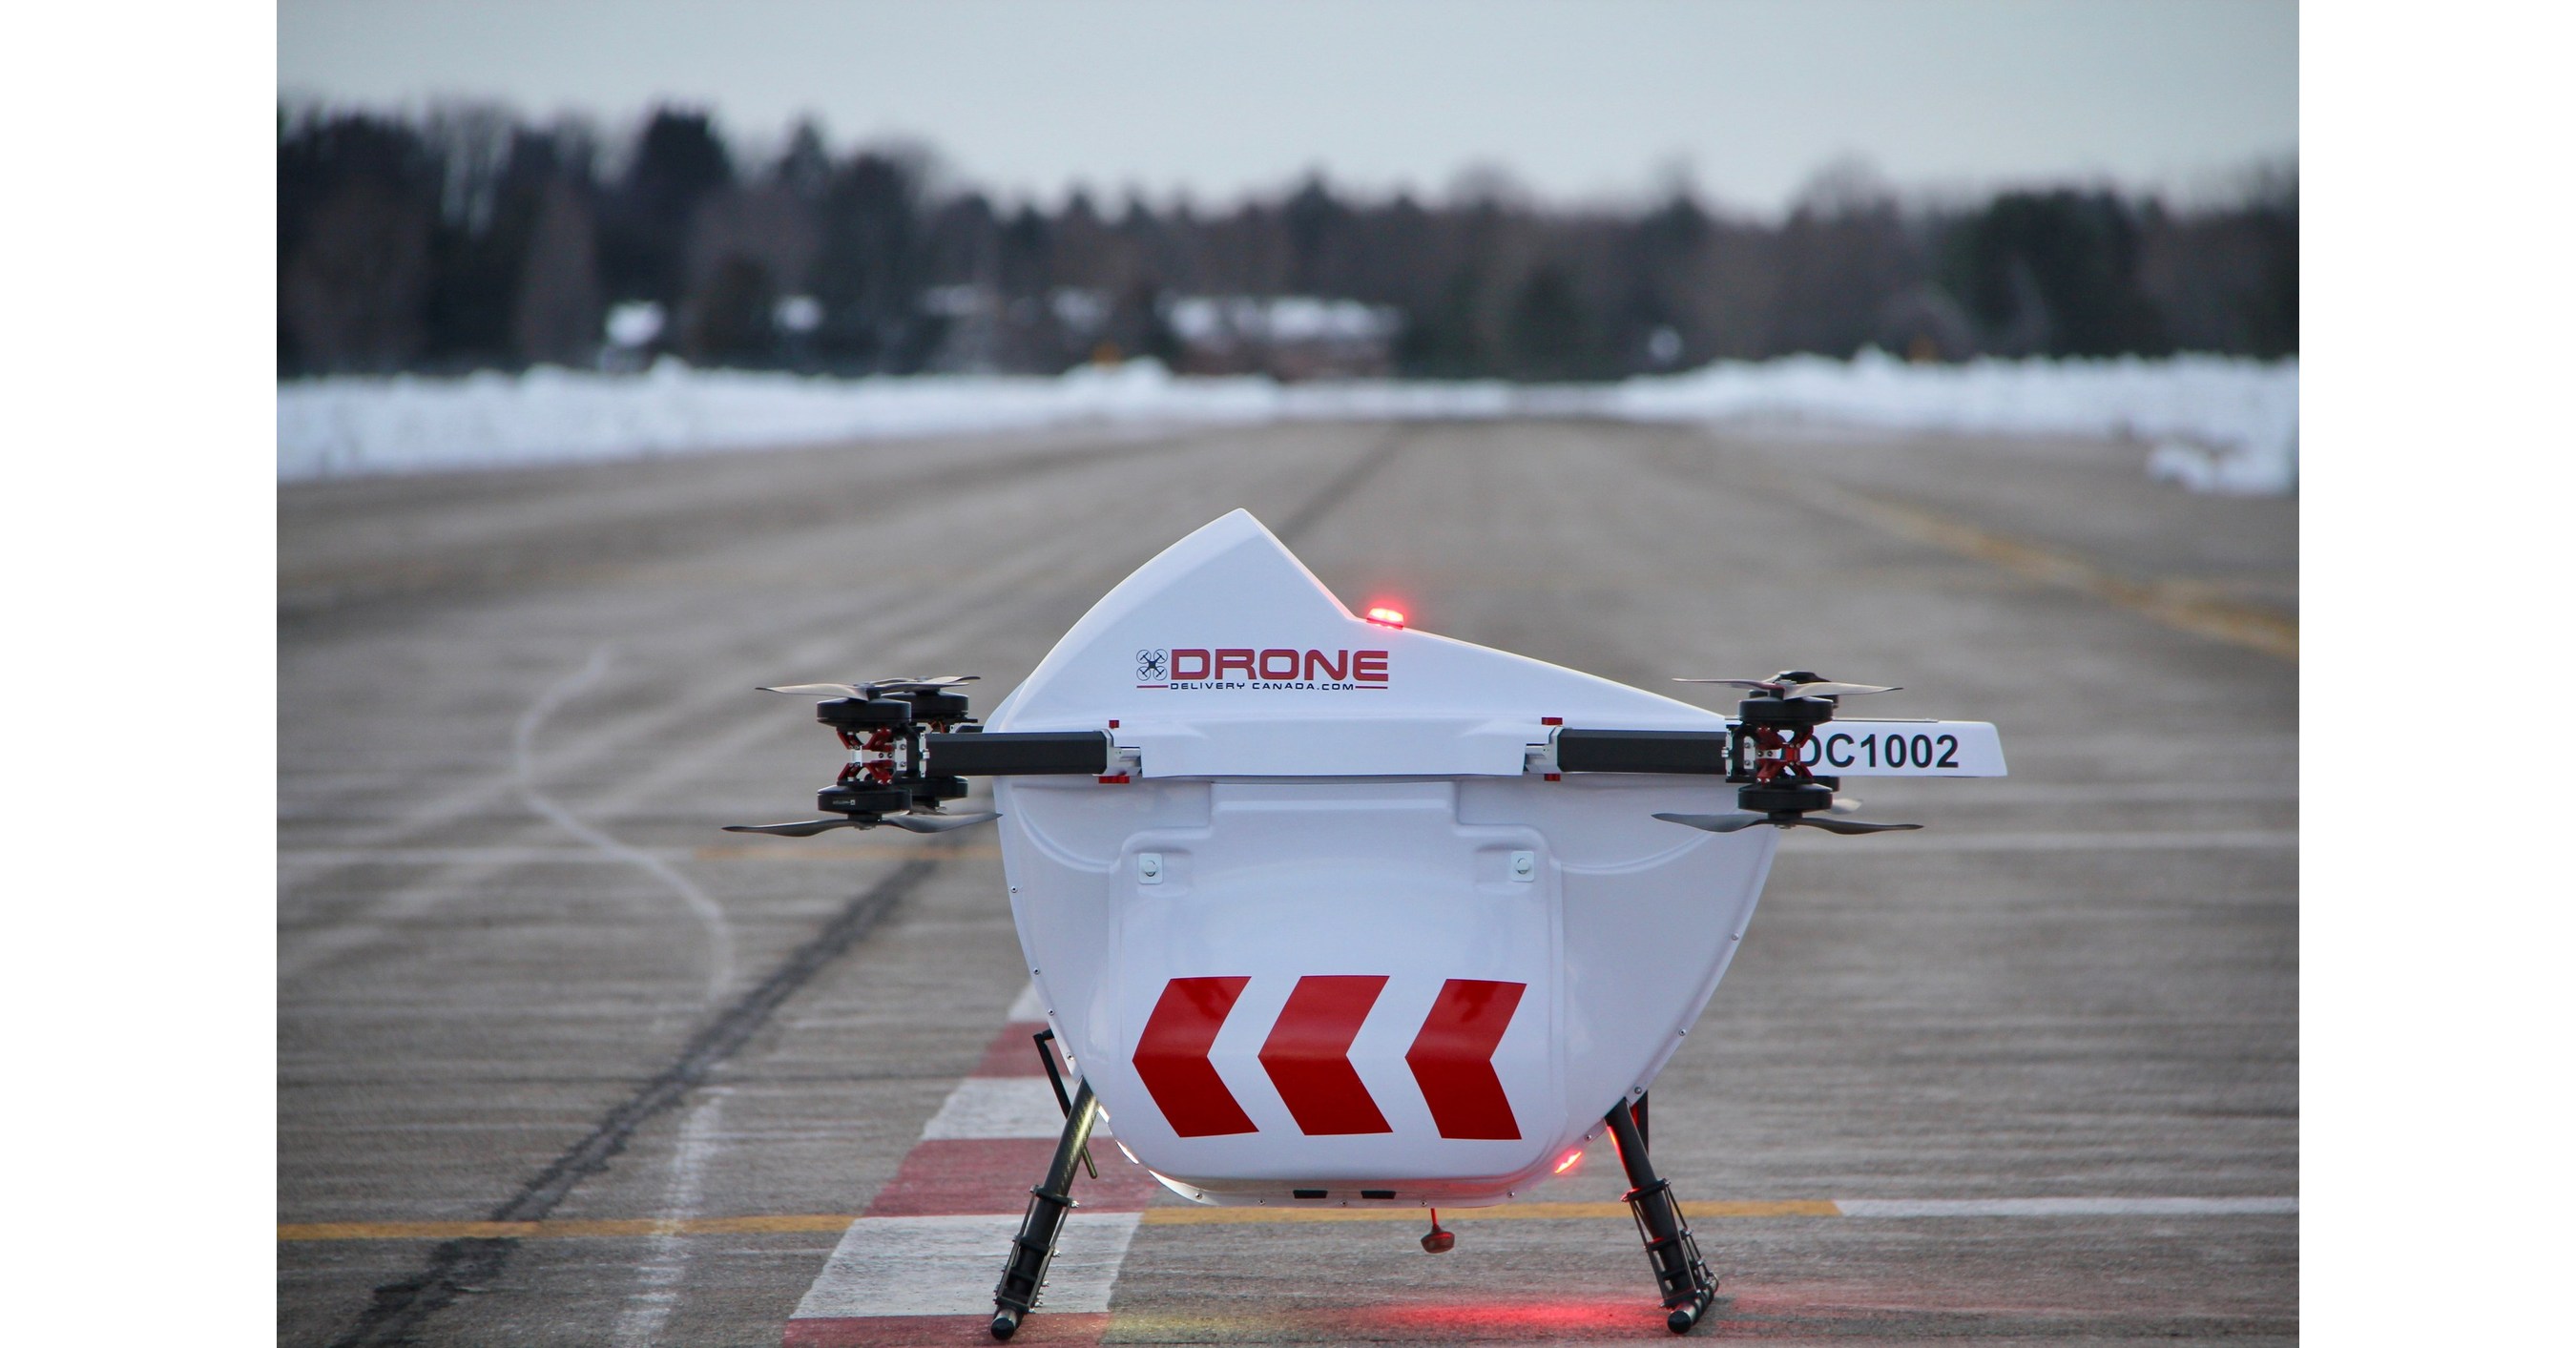 Drone on Runway